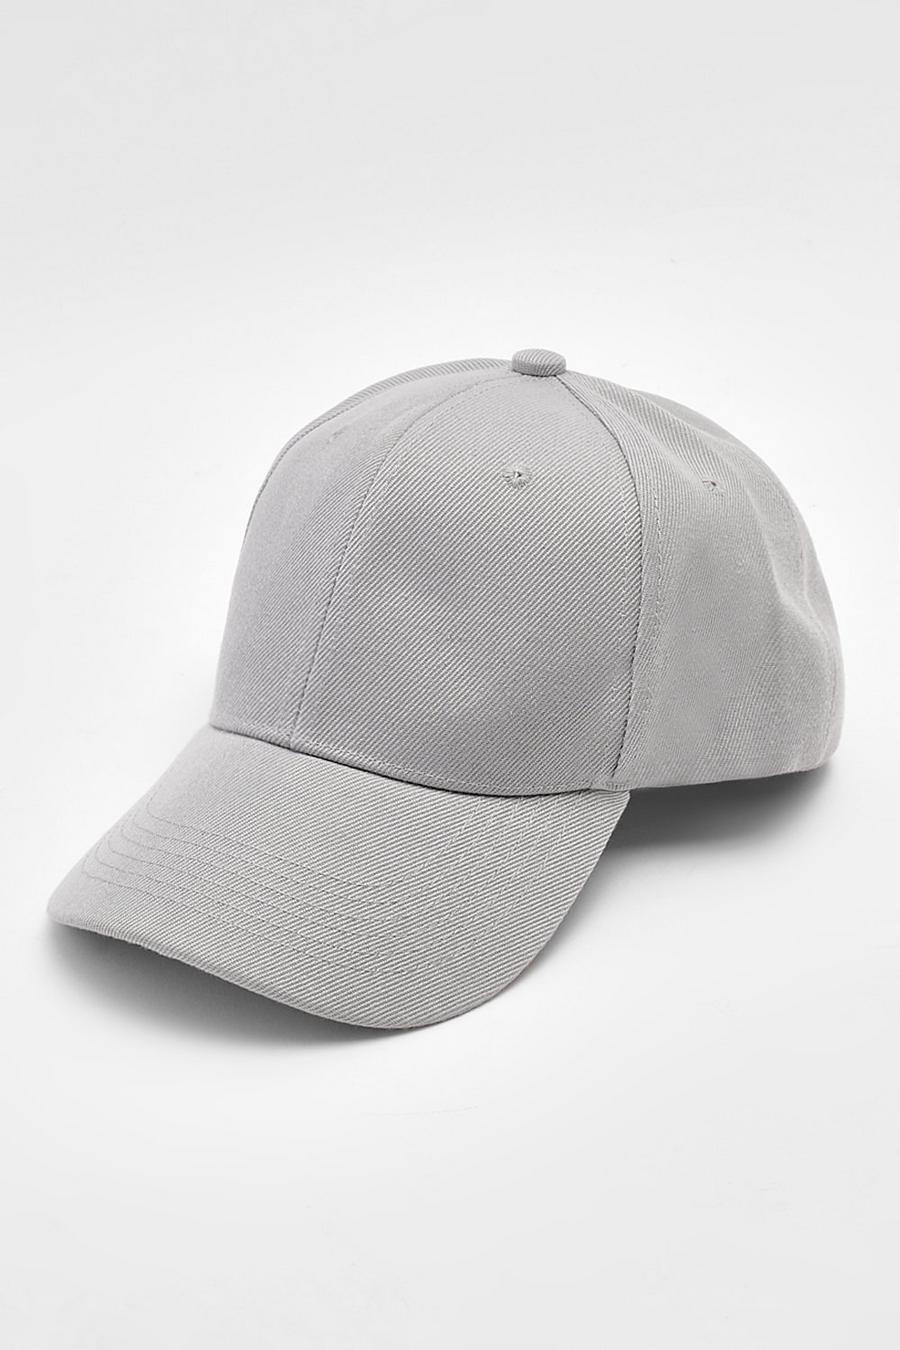 Grey כובע מצחייה בייסבול חלק בצבע אפור בהיר